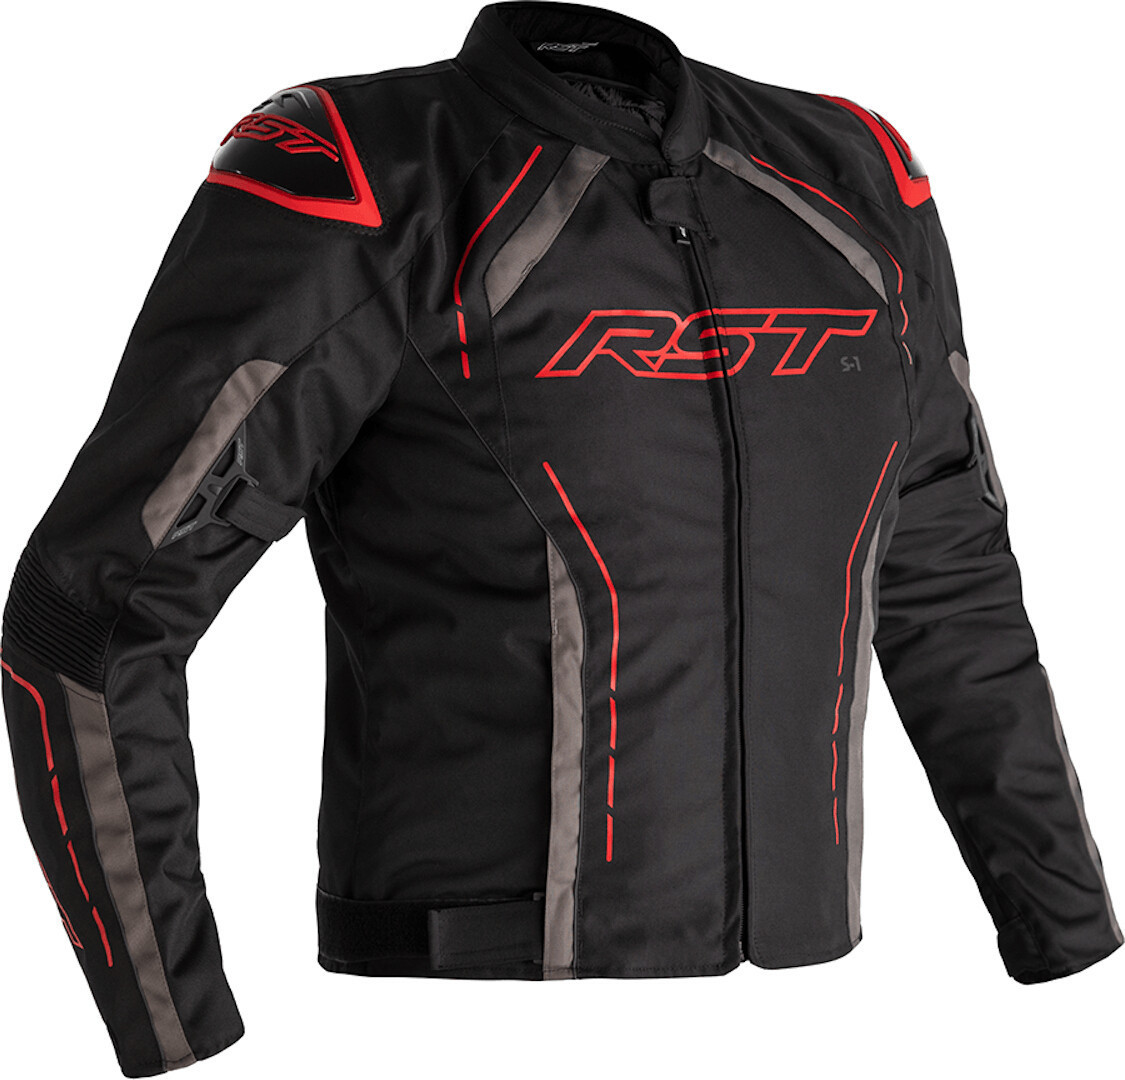 RST S-1 Motorrad Textiljacke, schwarz-grau-rot, Größe M